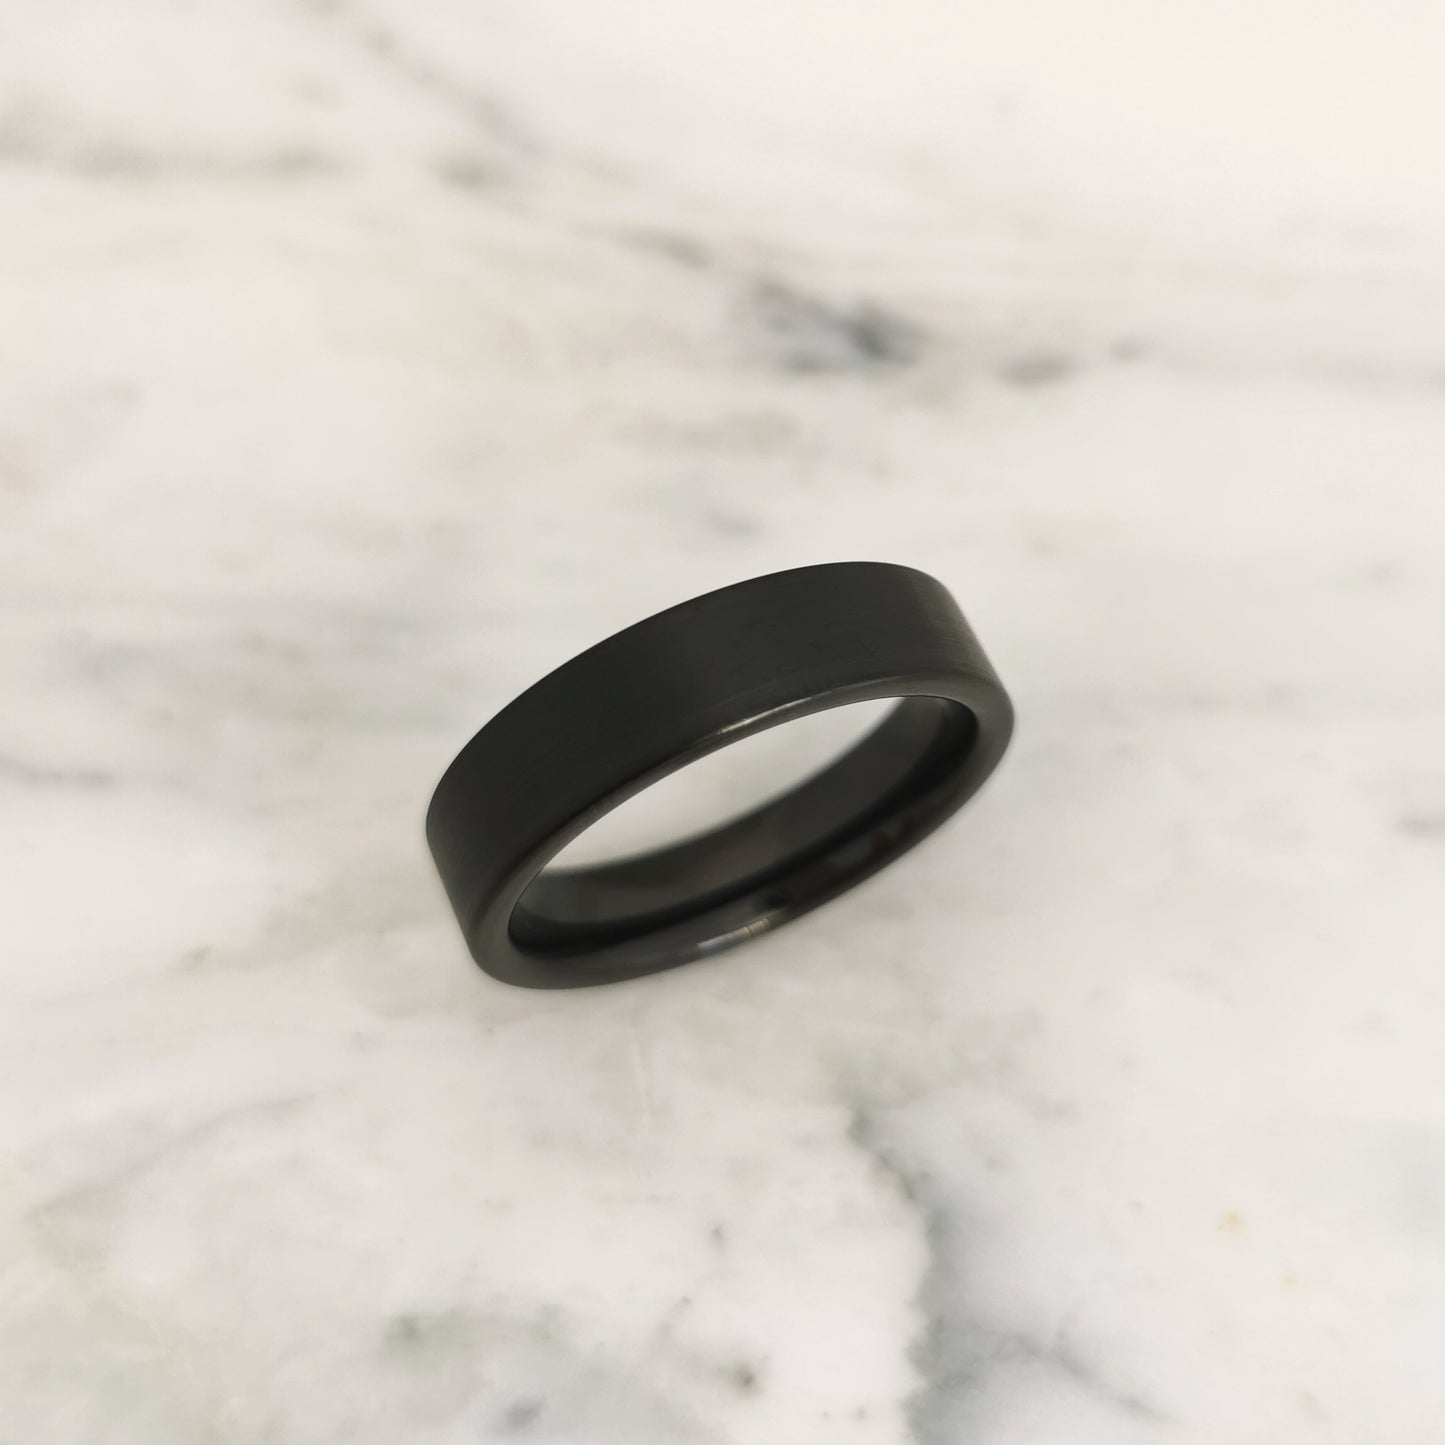 6mm Wide Flat Matt Black Tungsten Ring